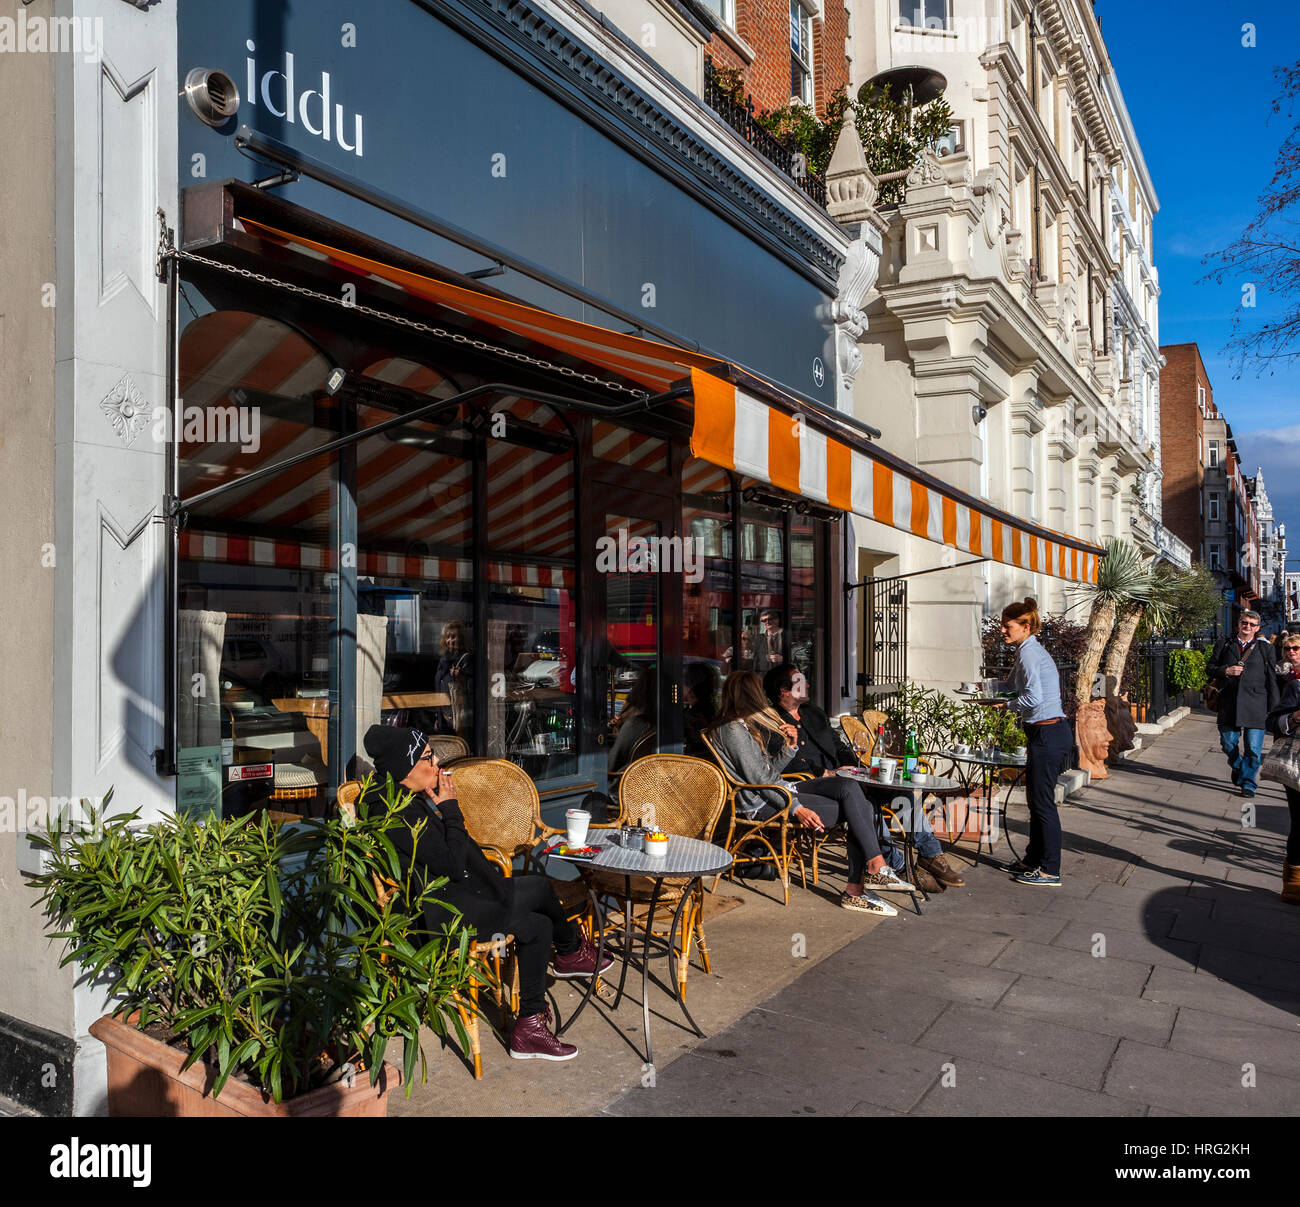 Iddu Restaurant, South Kensington, London Stockfoto